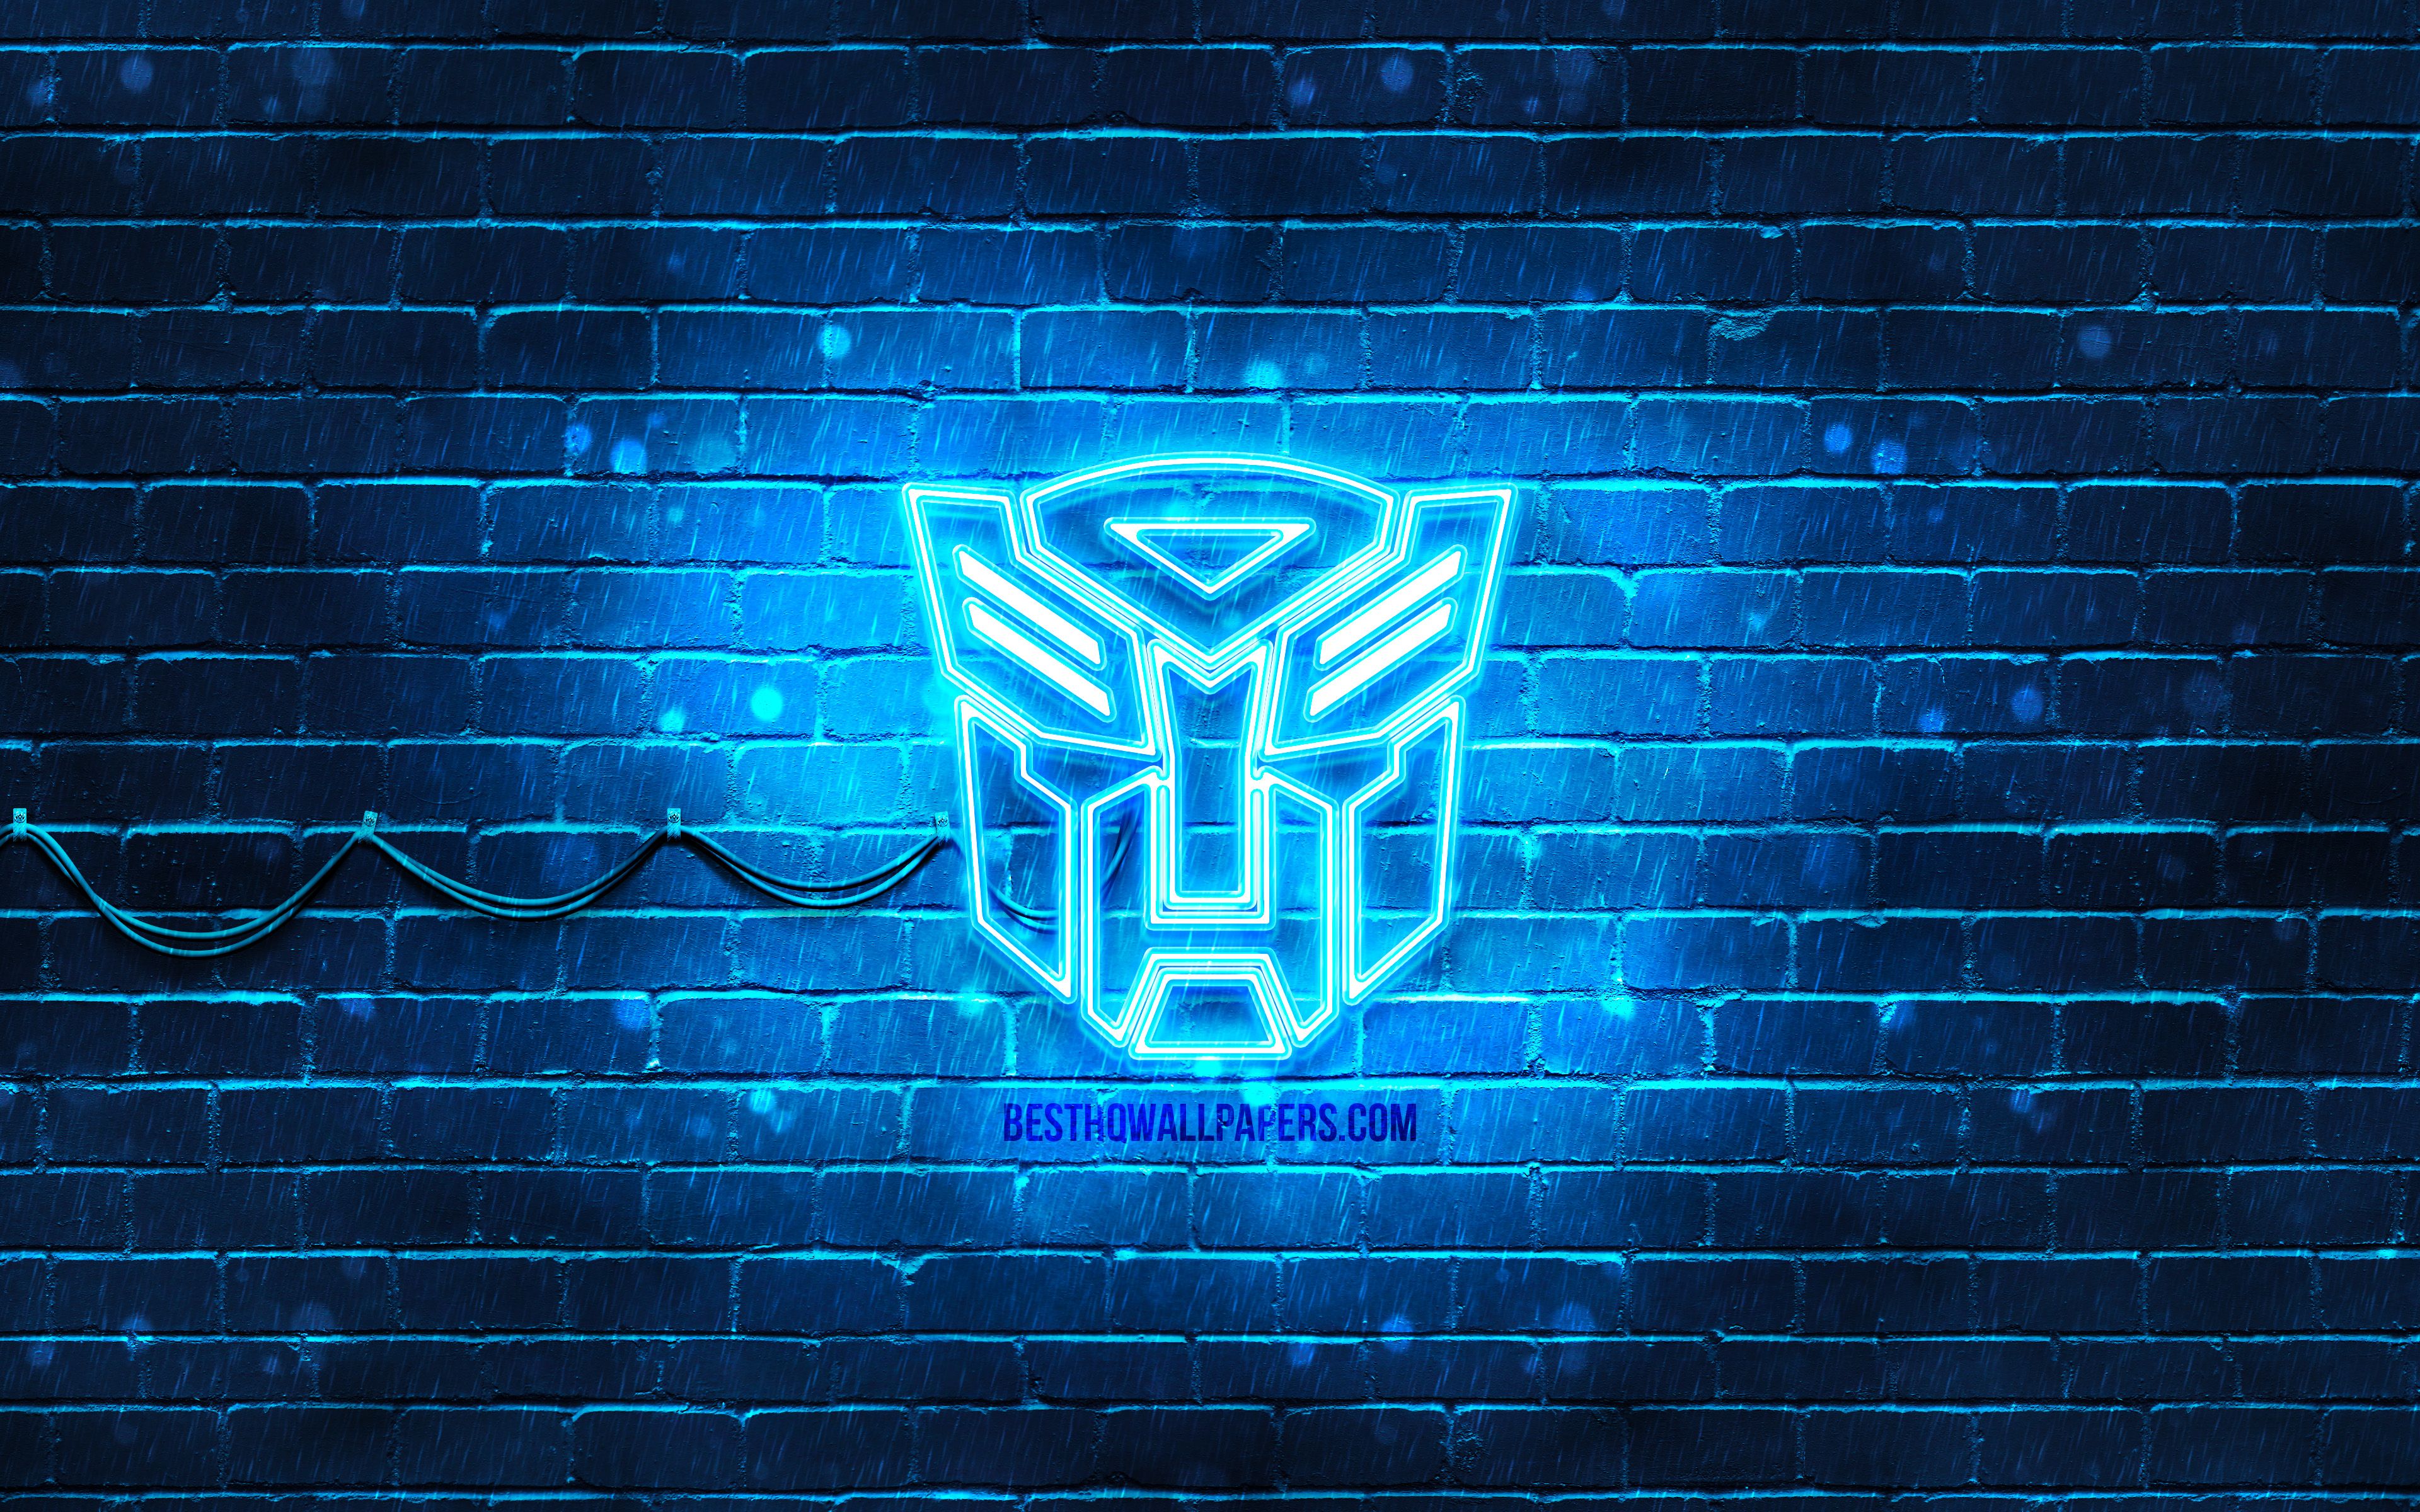 Wallpaper Transformers Logo